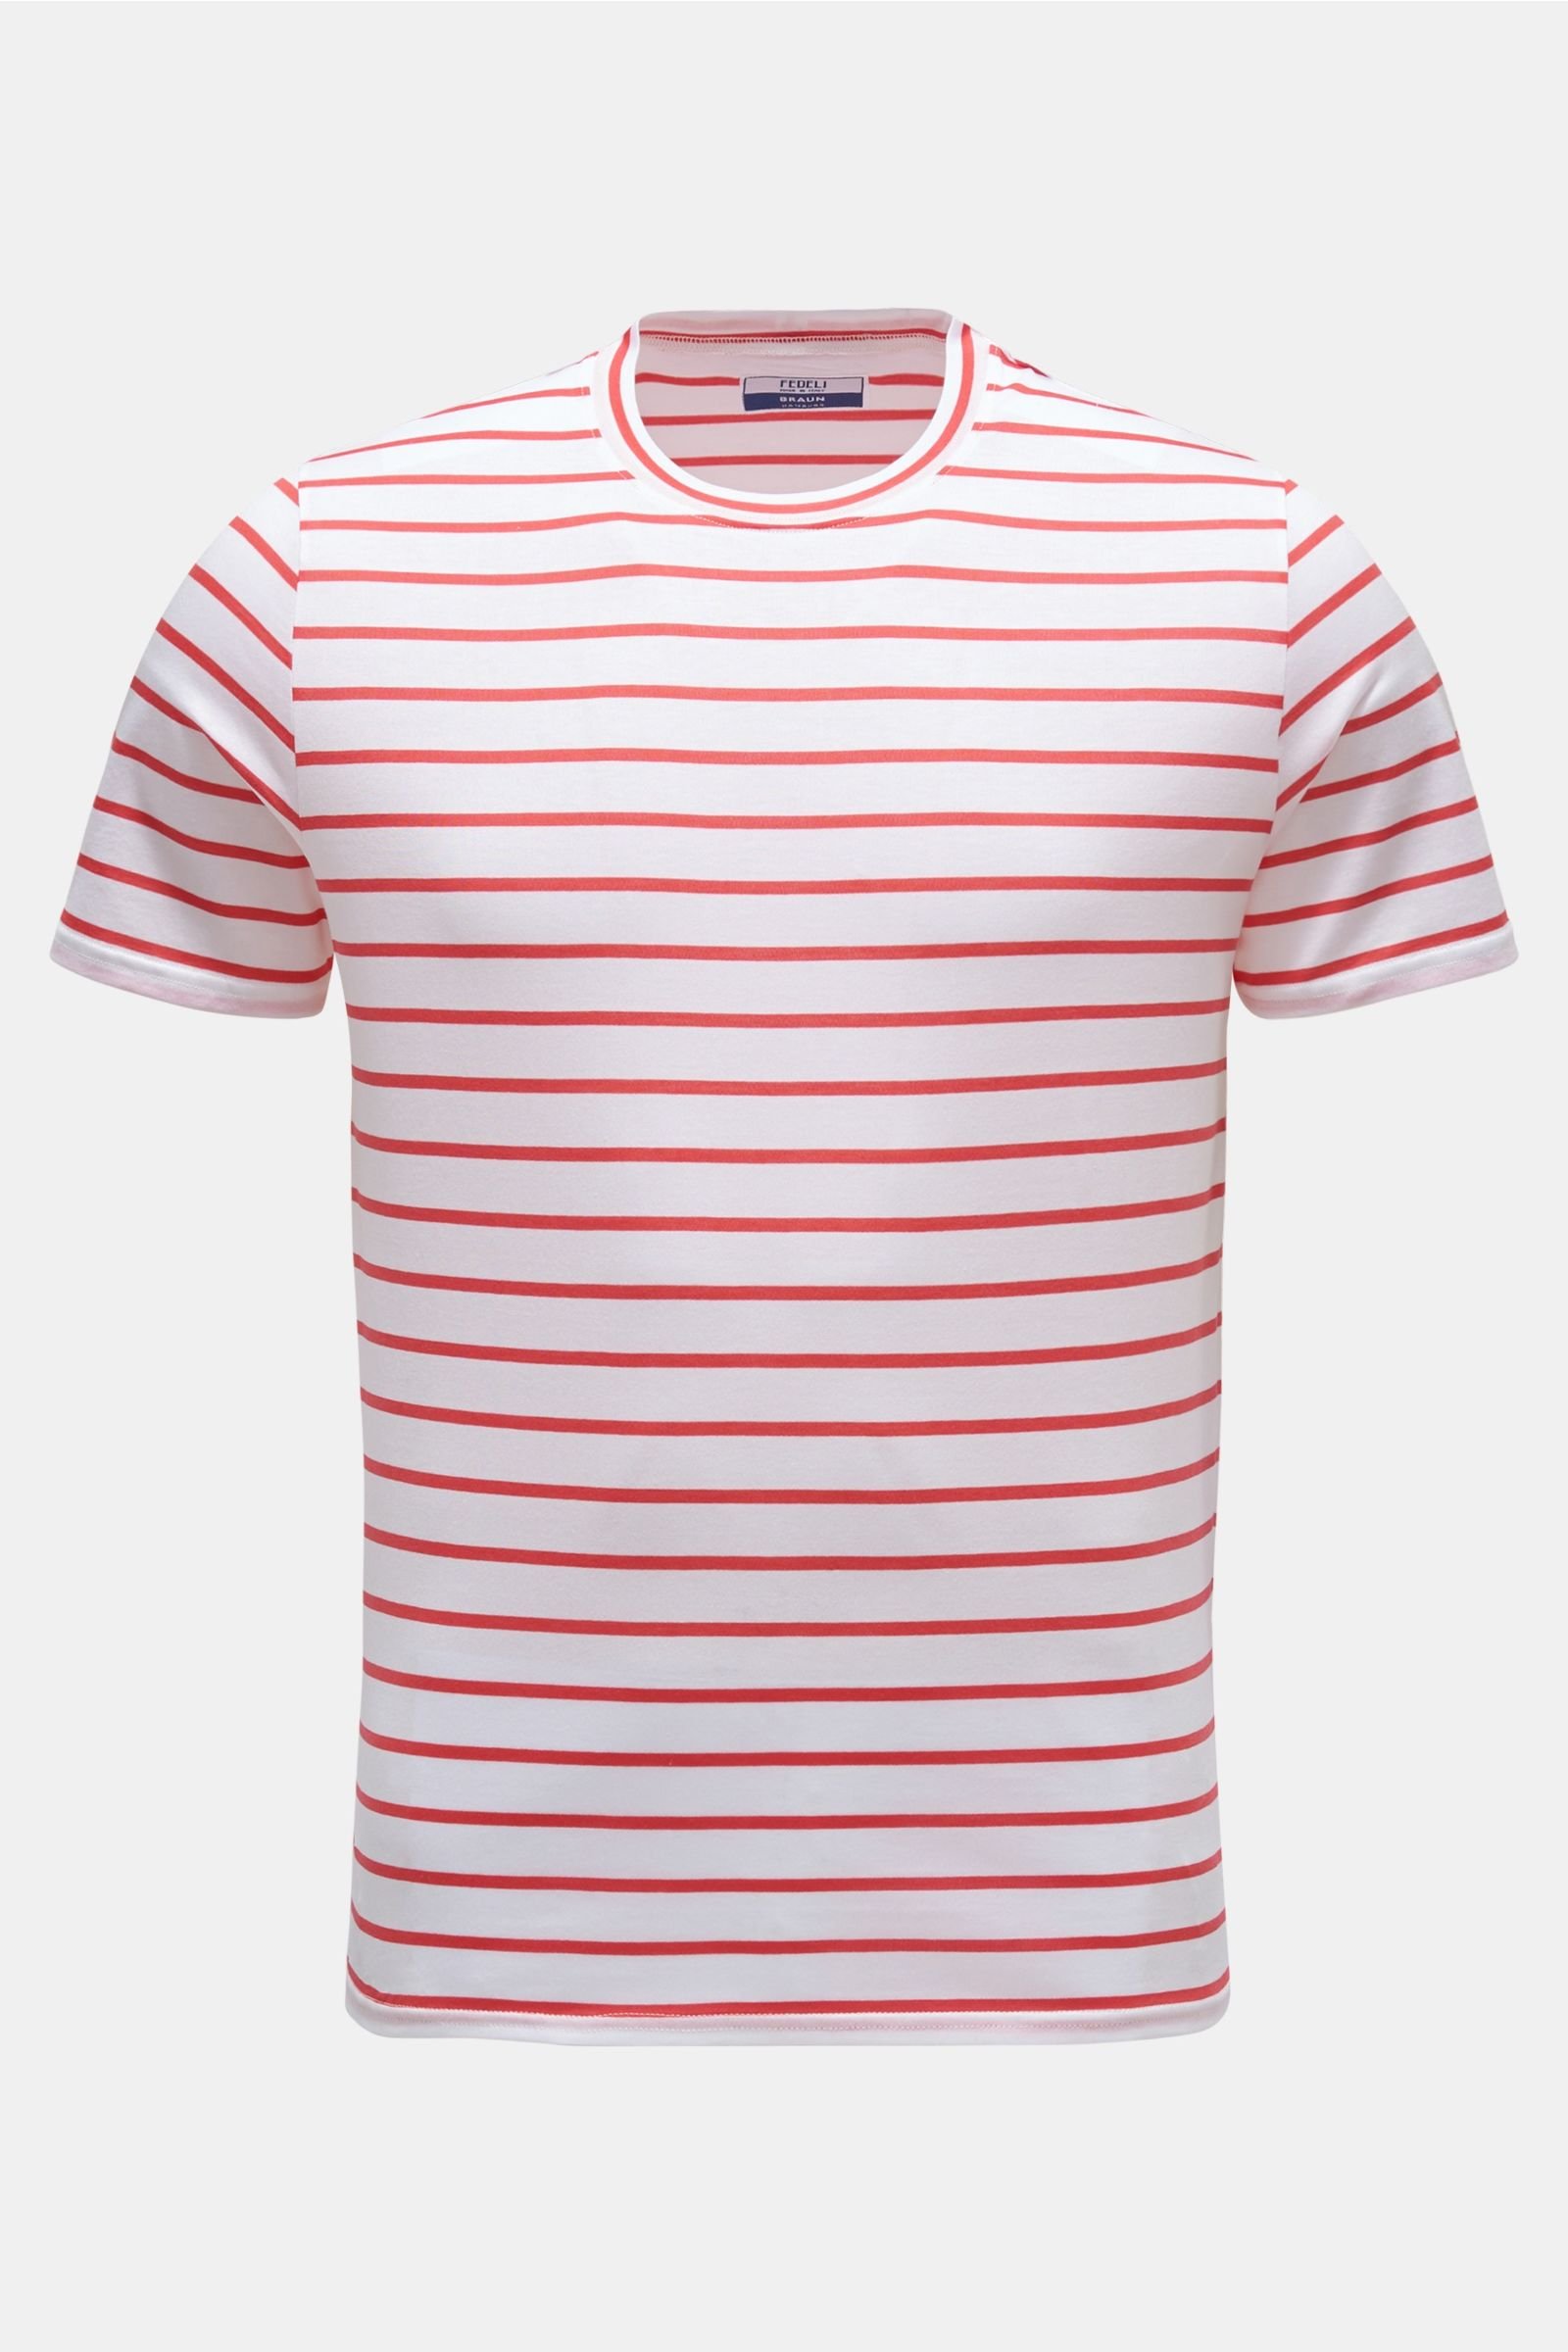 Crew neck T-shirt 'Gary' red/white striped